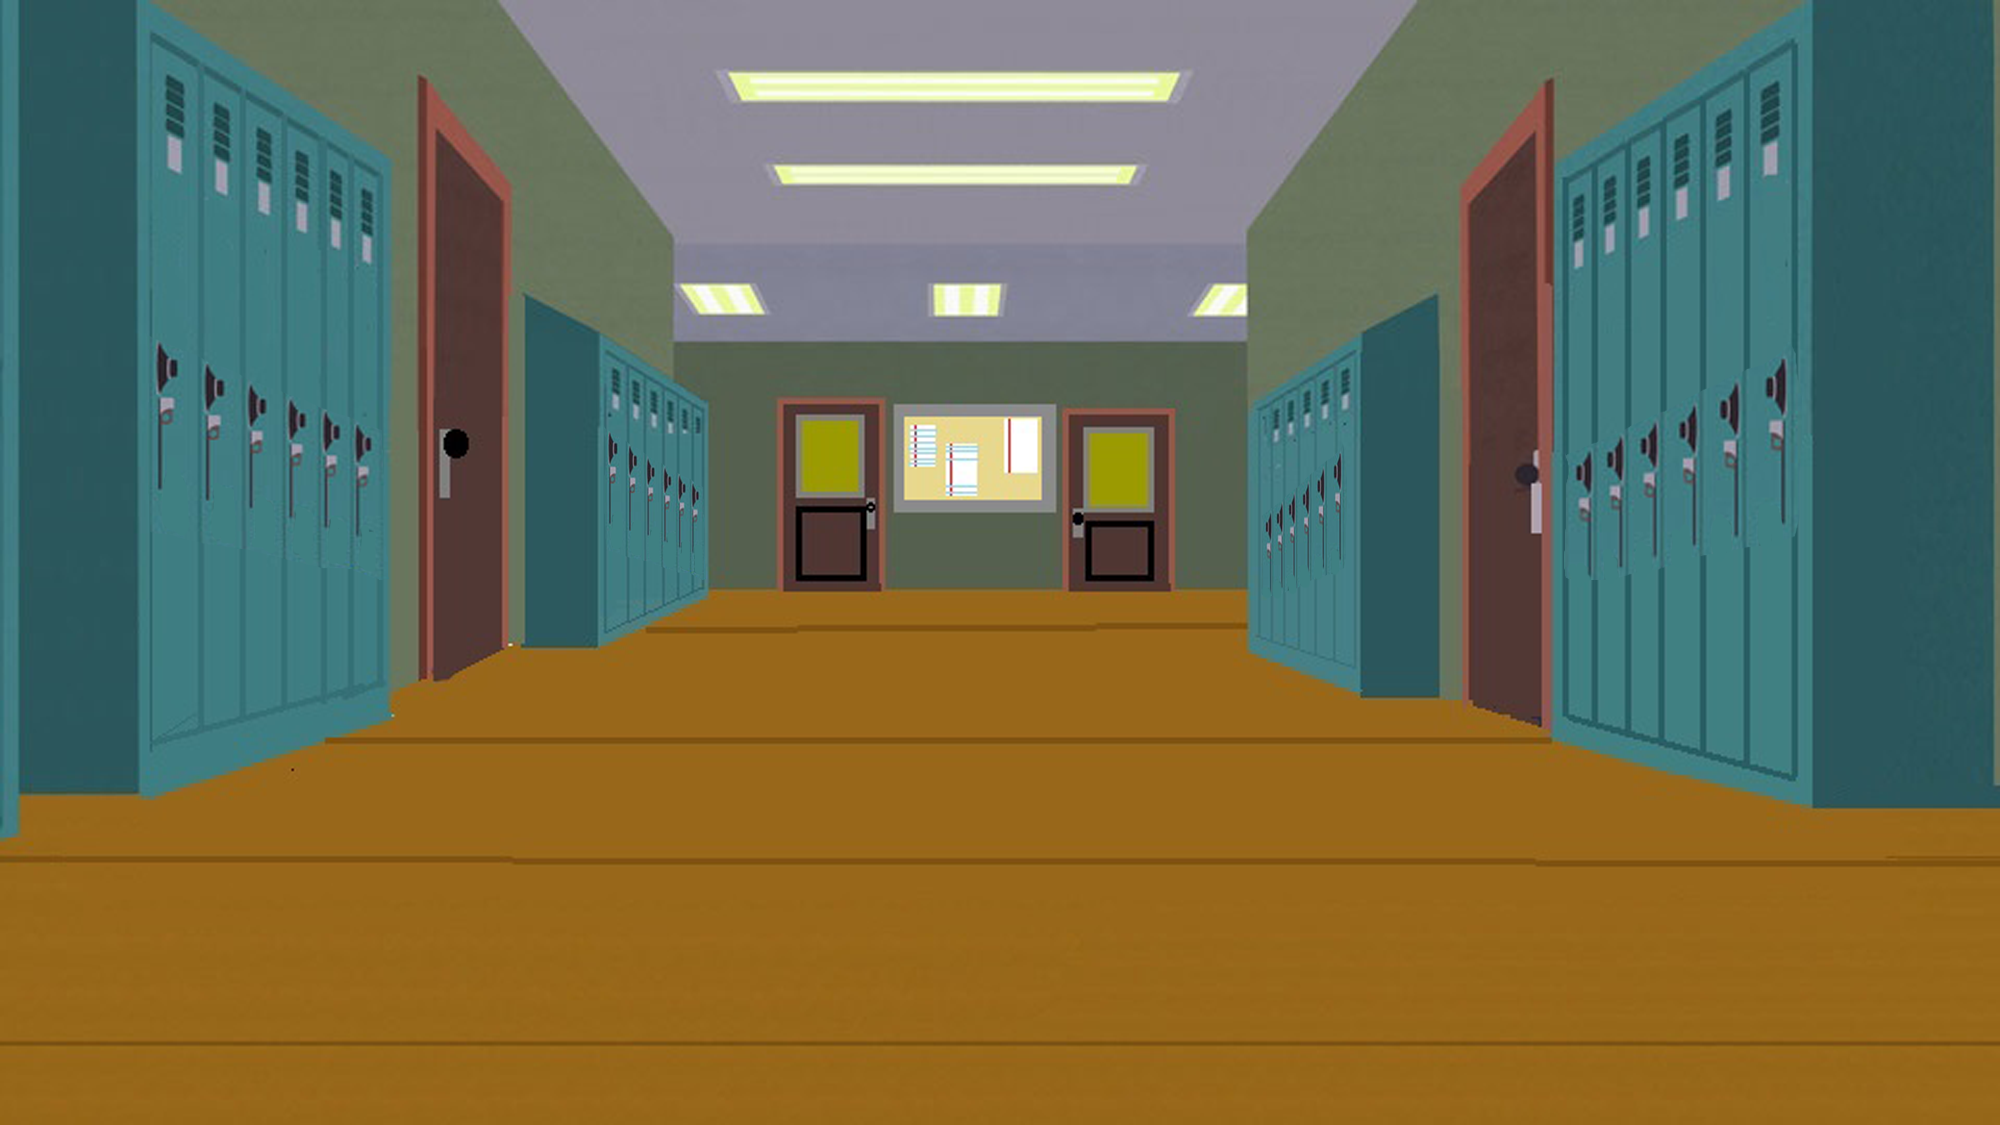 South Park Elementary School Hallway By Spongekid1999